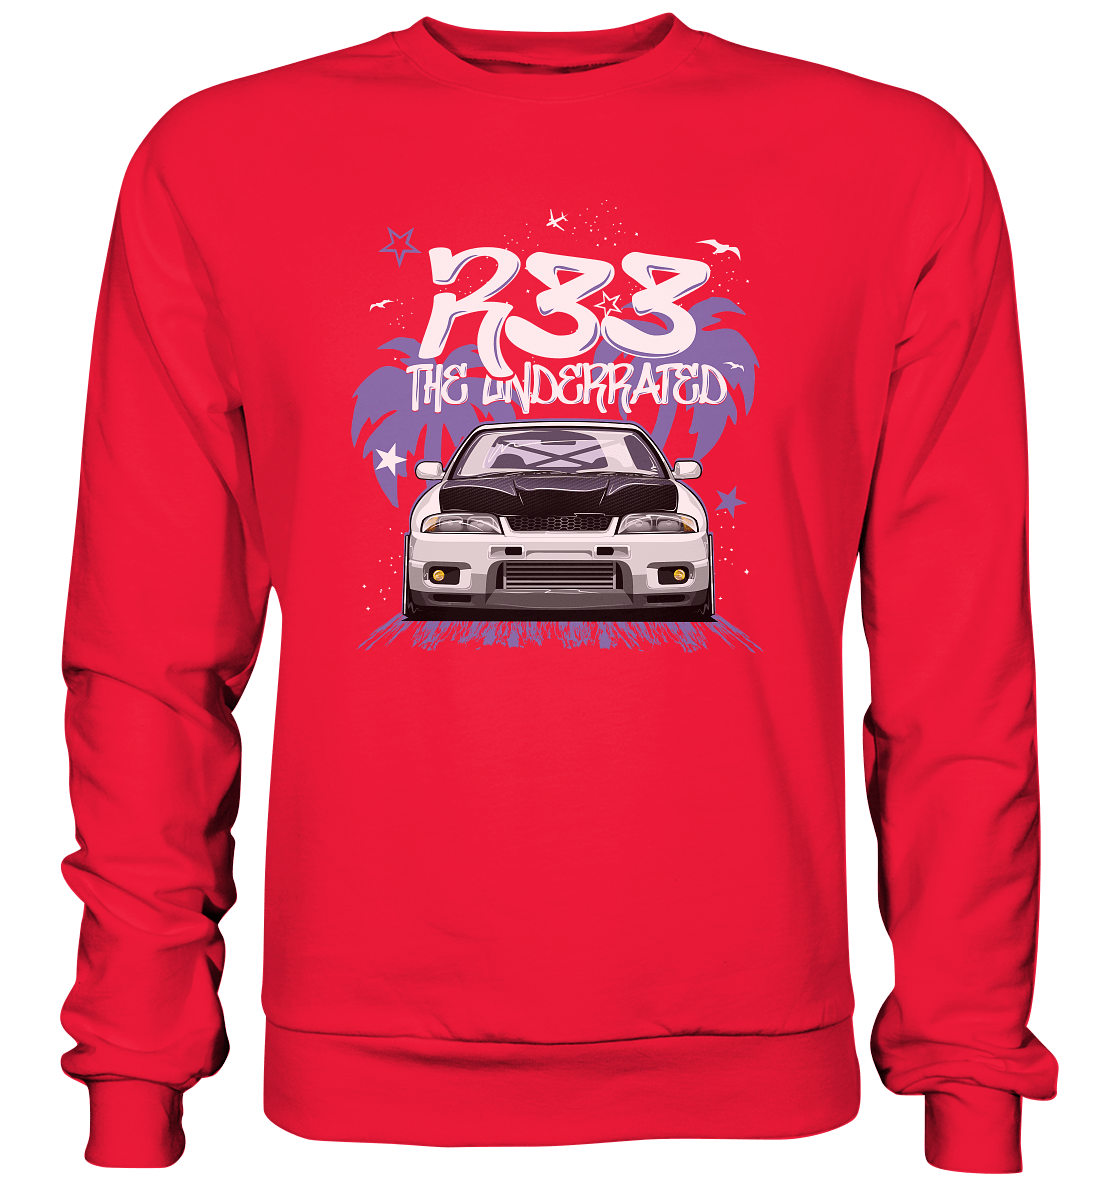 Skyline R33 - Premium Sweatshirt - MotoMerch.de